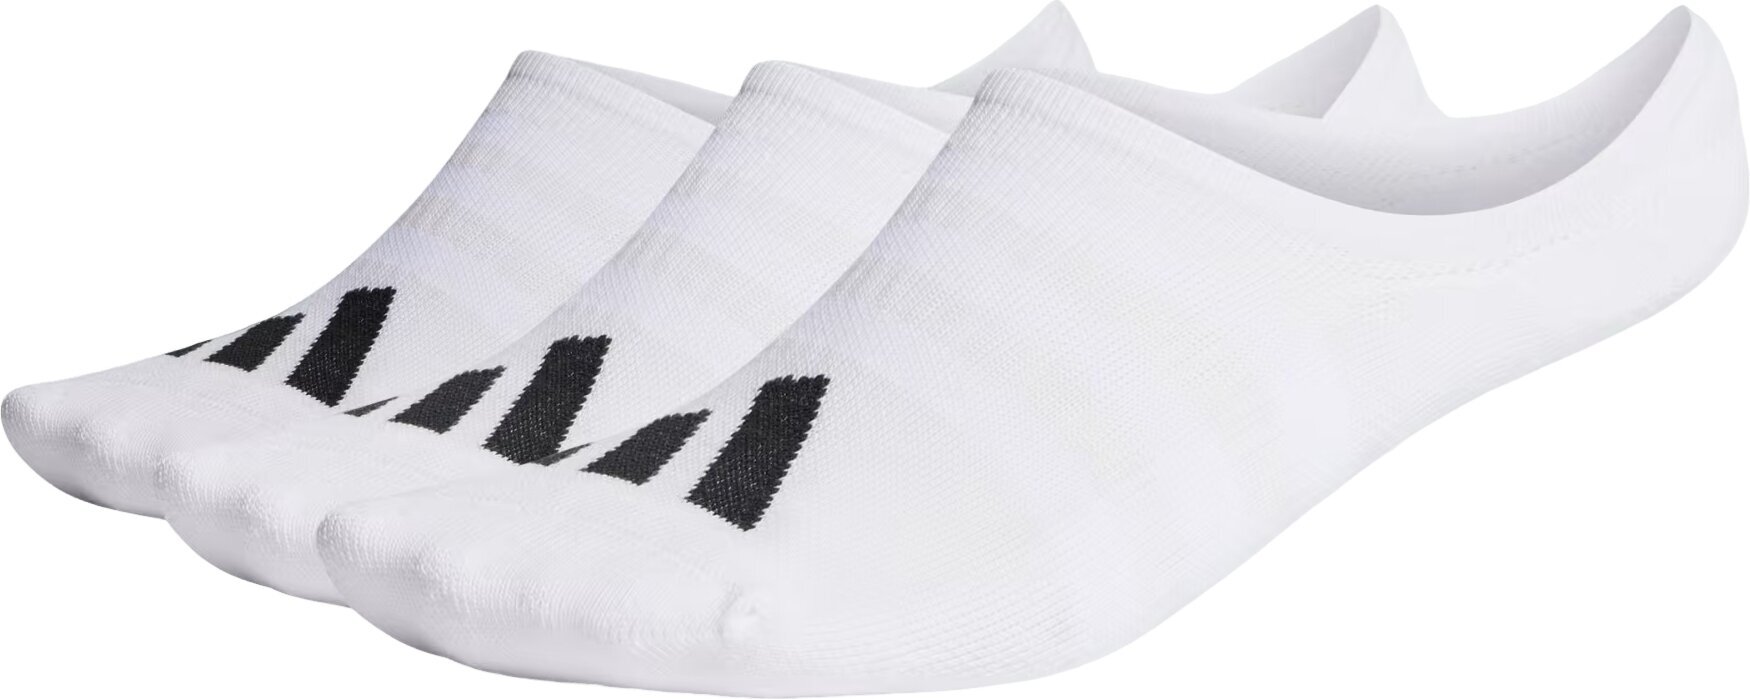 Socks Adidas No Show Golf Socks 3-Pairs Socks White 48-51